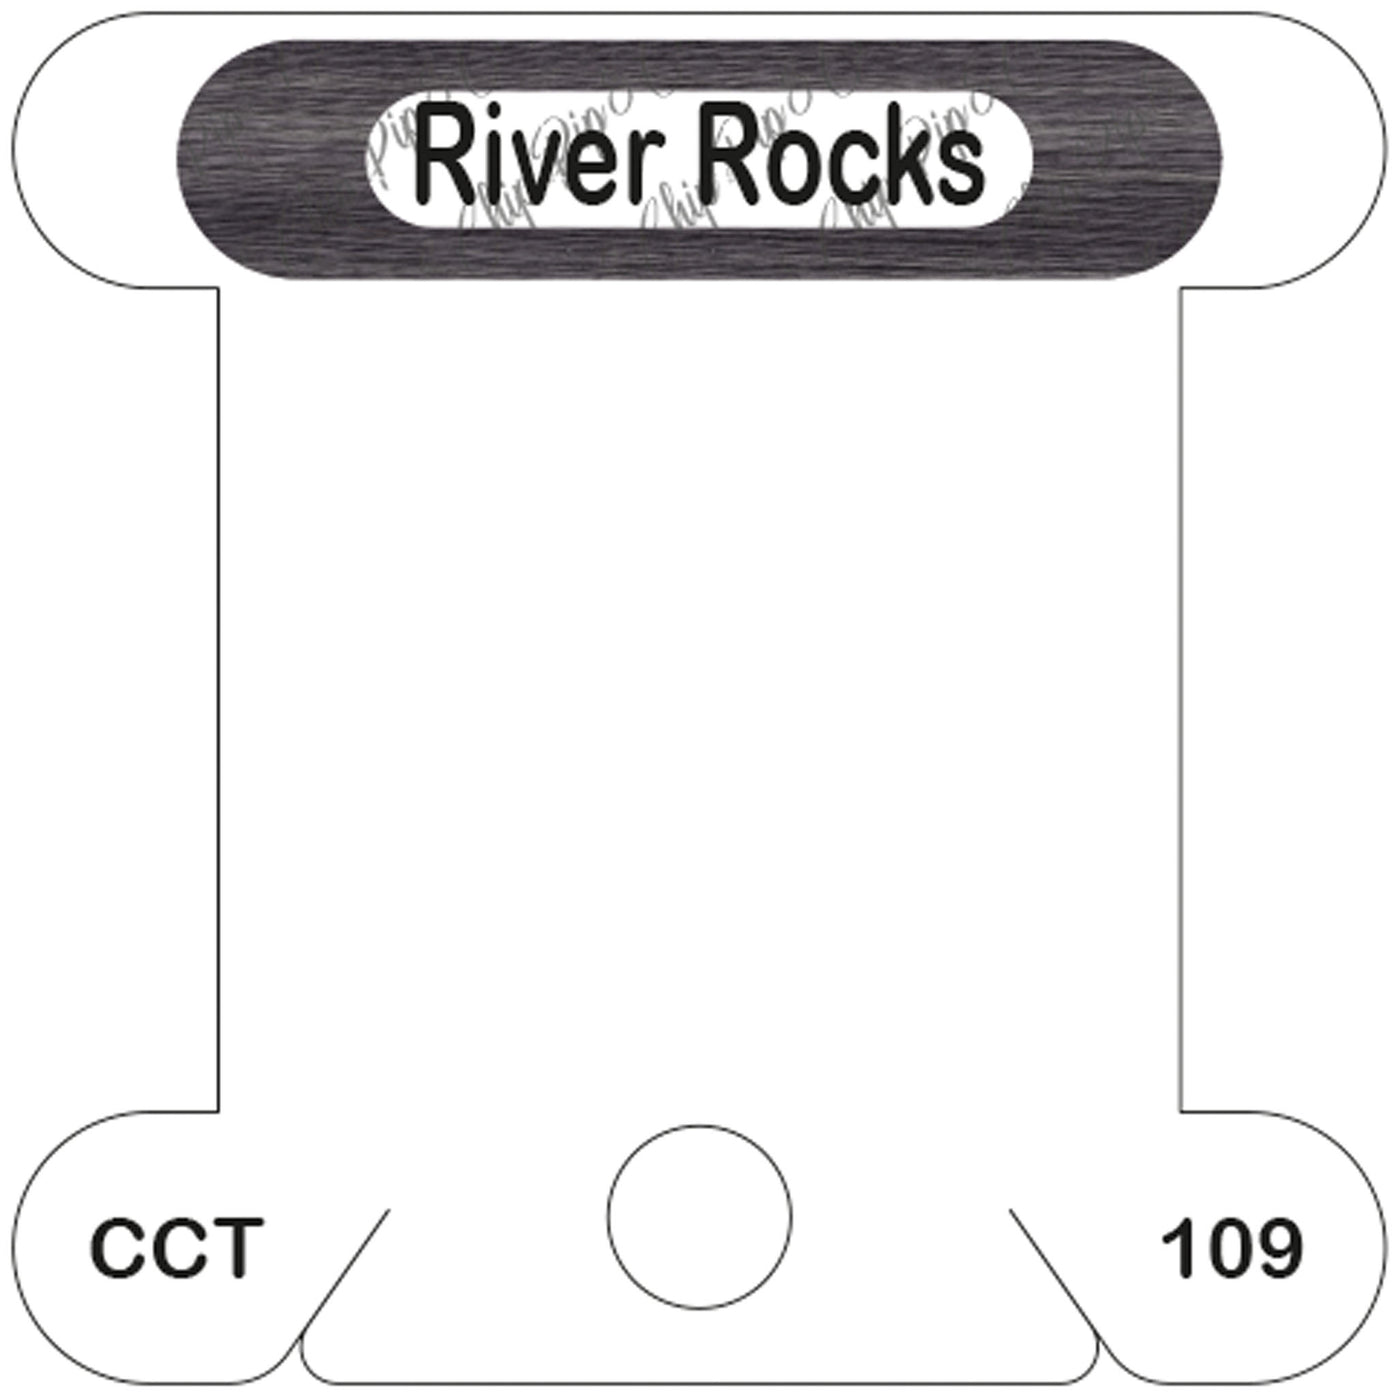 Classic Colorworks River Rocks acrylic bobbin